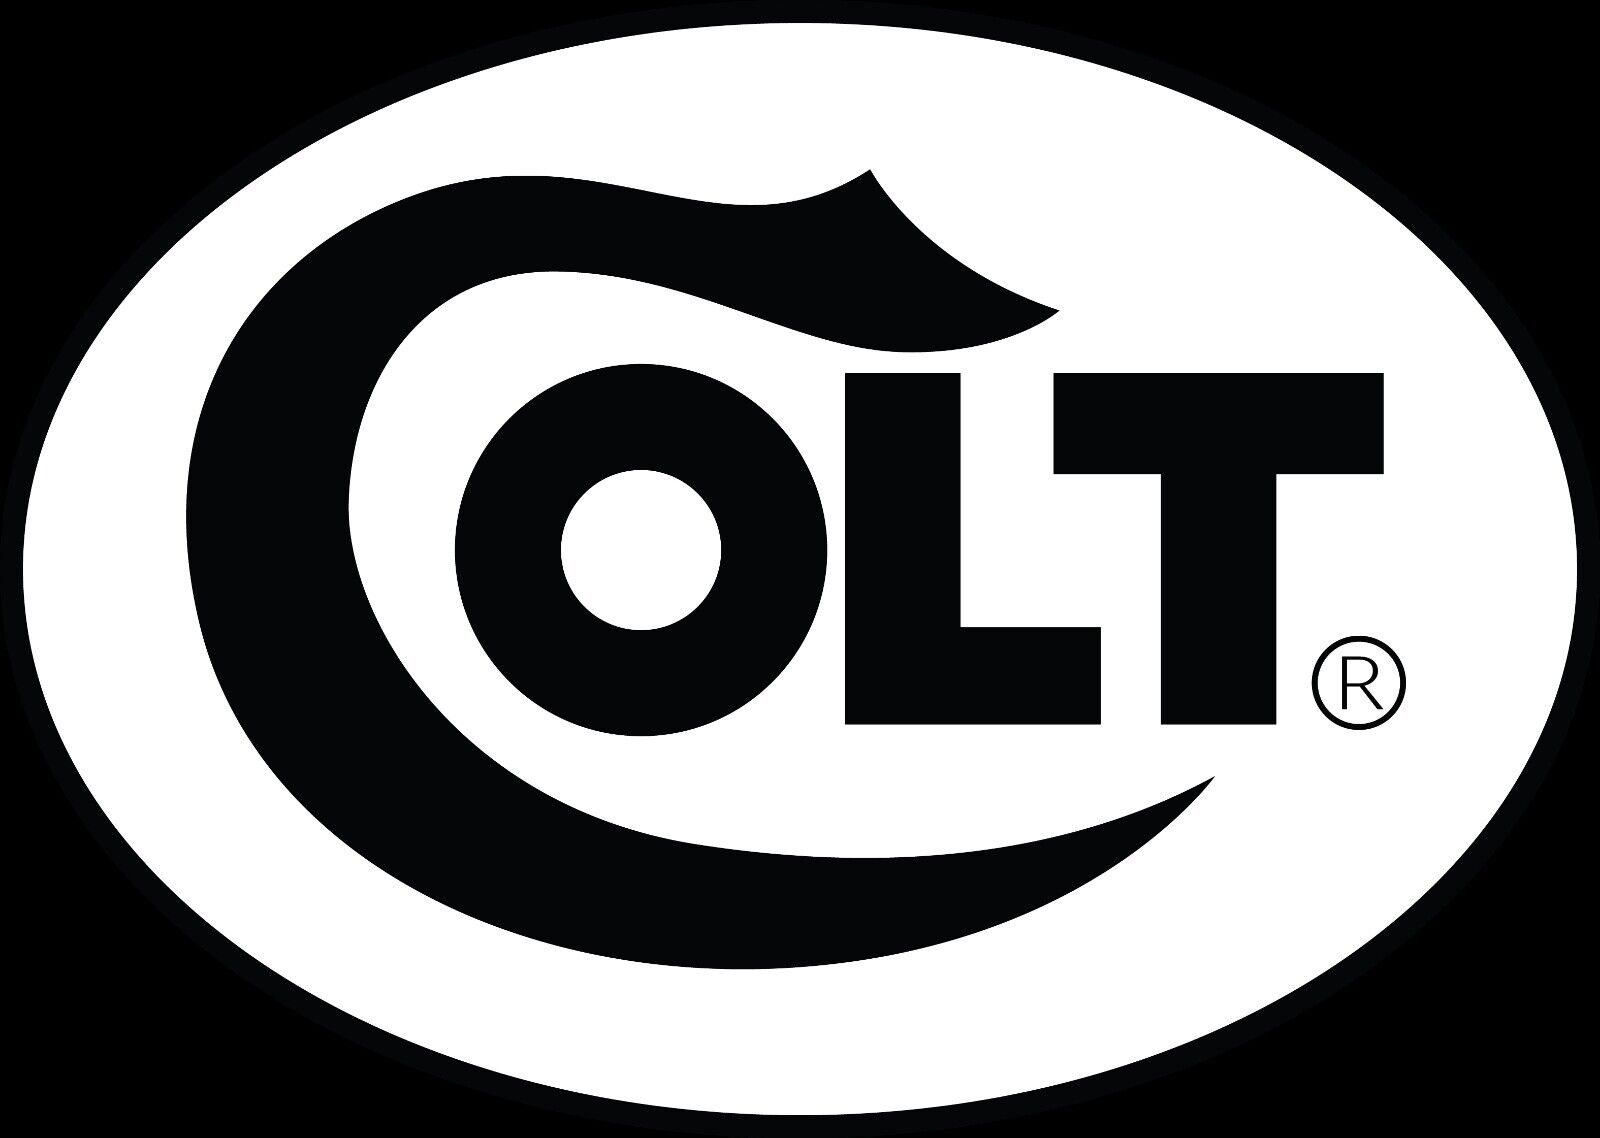 Colt Firearms Sticker logo Vinyl Decal / Sticker 10 Sizes